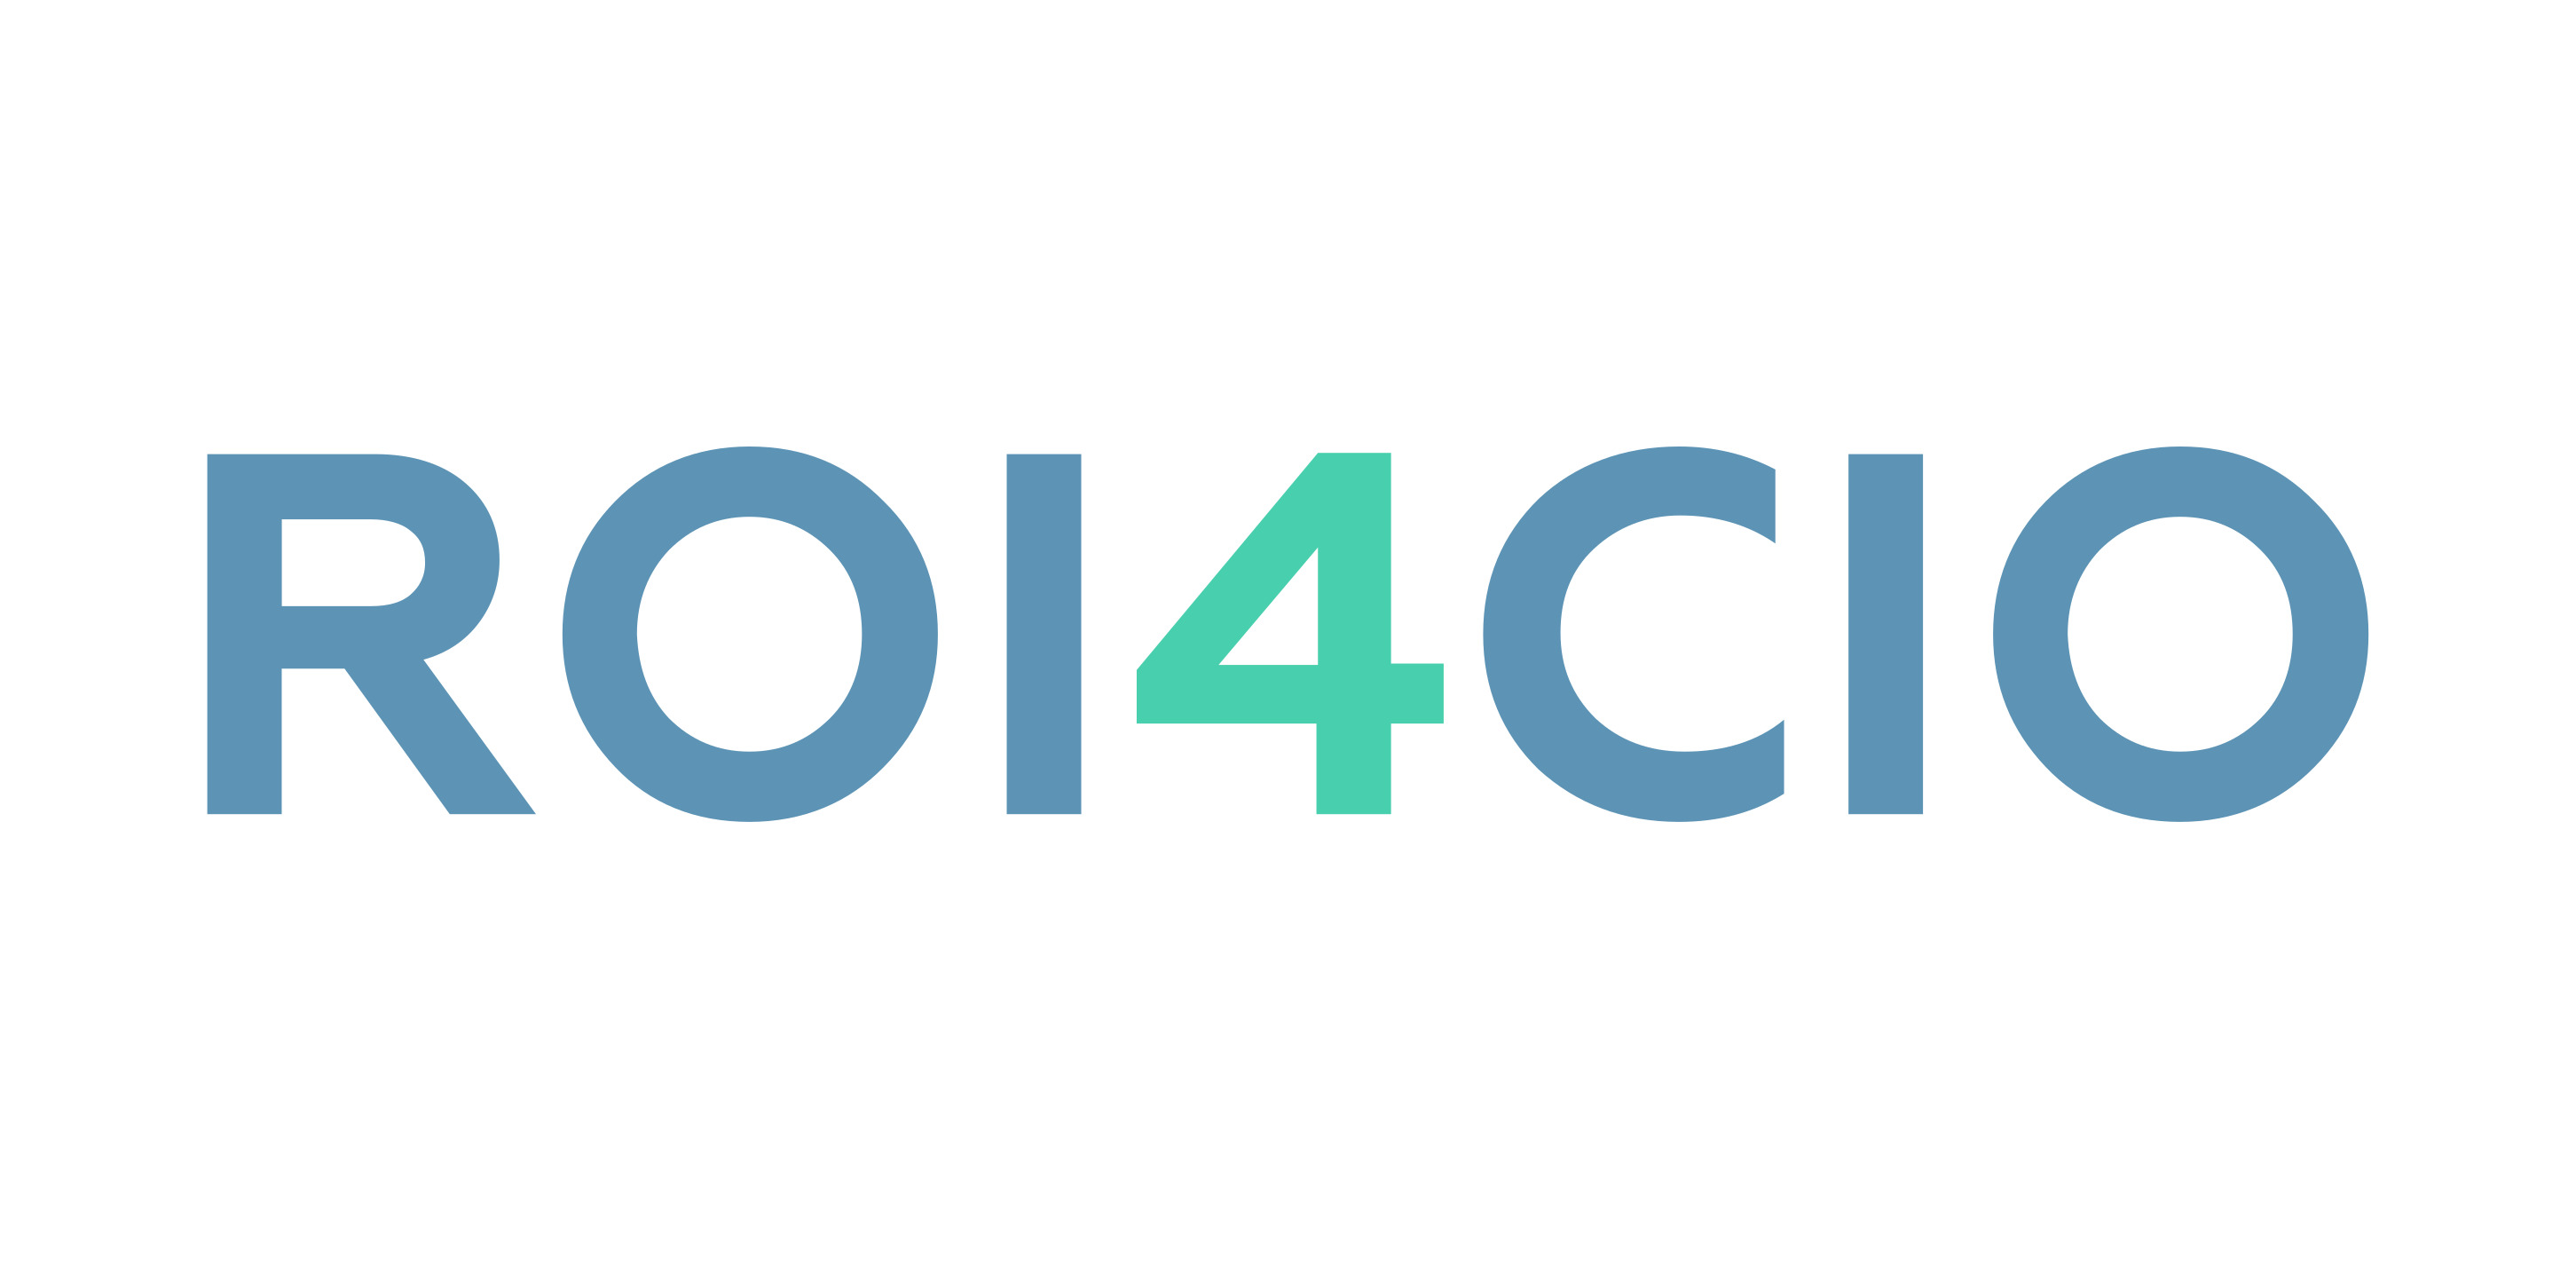 ROI4CIO logo